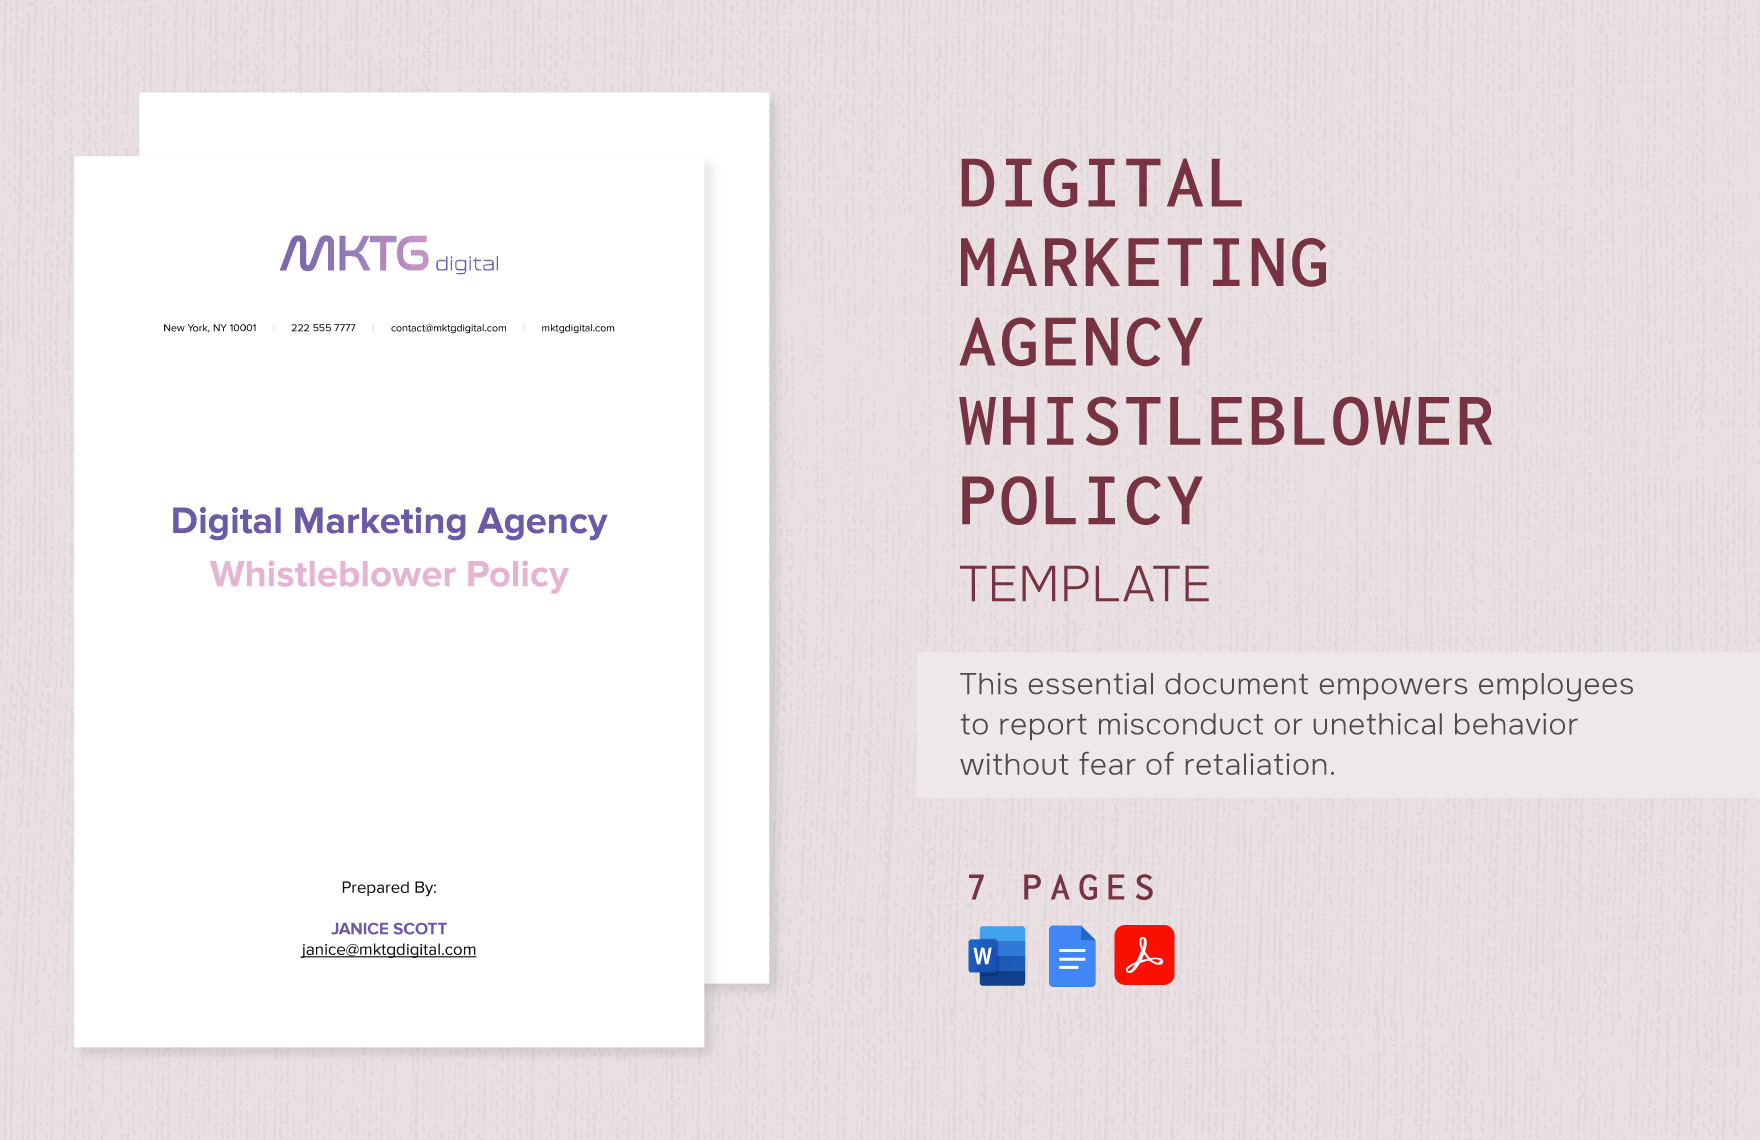 Digital Marketing Agency Whistleblower Policy Template